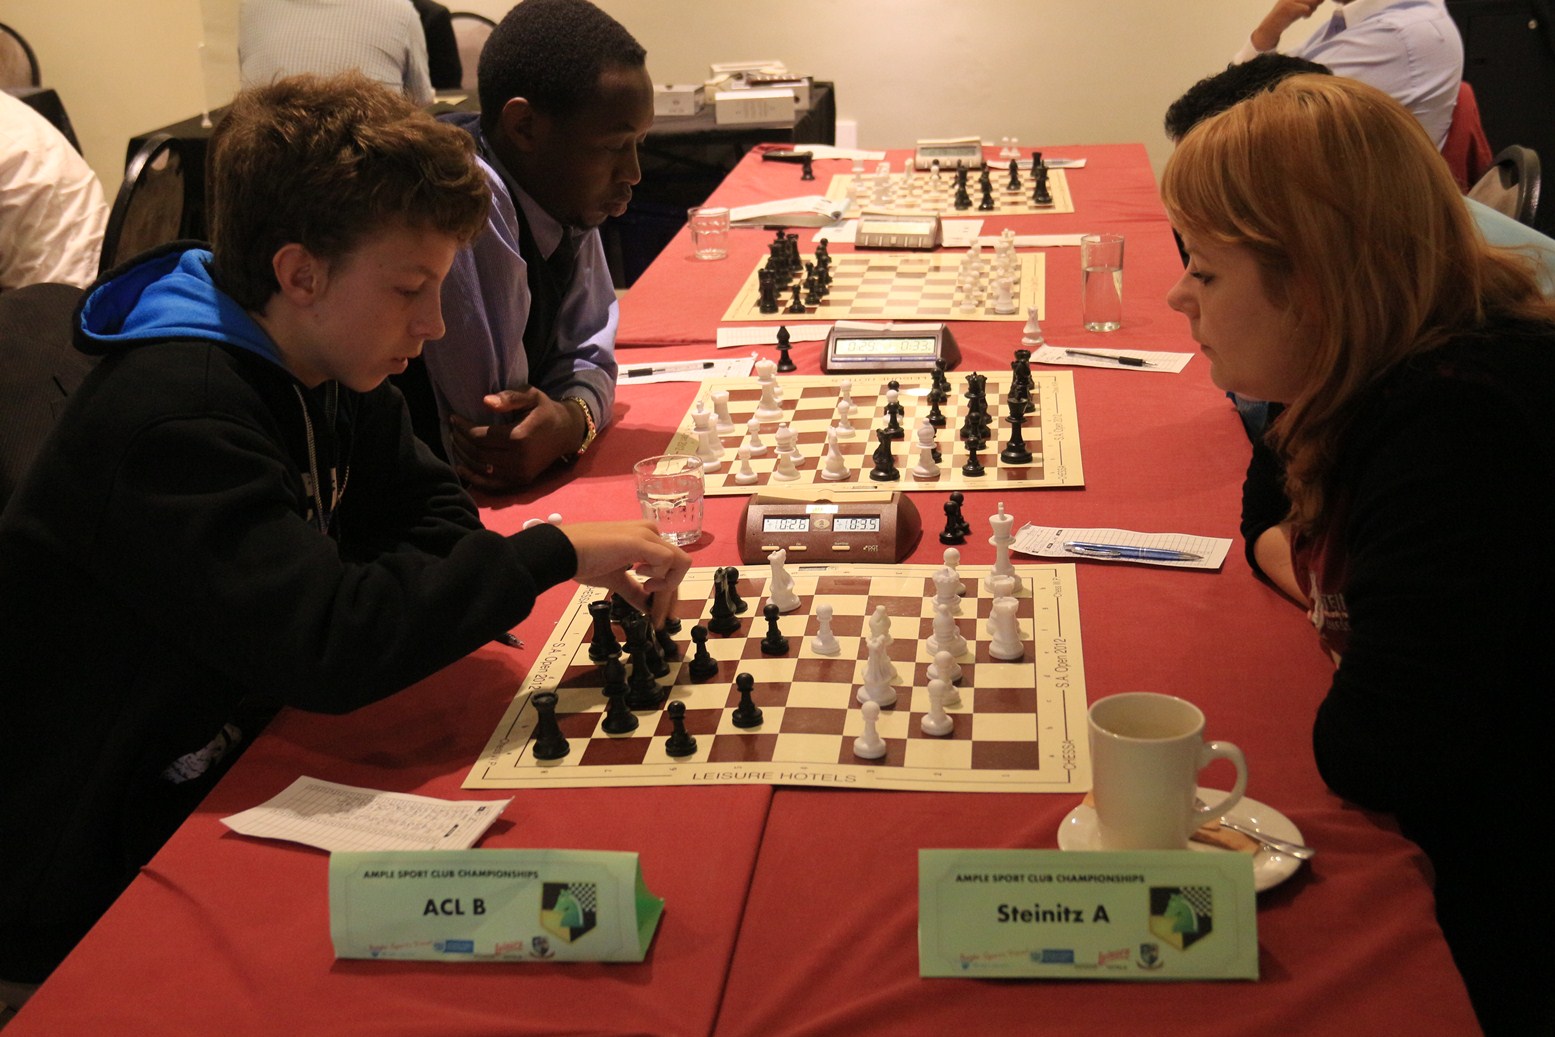 FIDE Master Daniel Barrish makes a move with Woman Grandmaster Katarzyna Toma keeping a close eye.